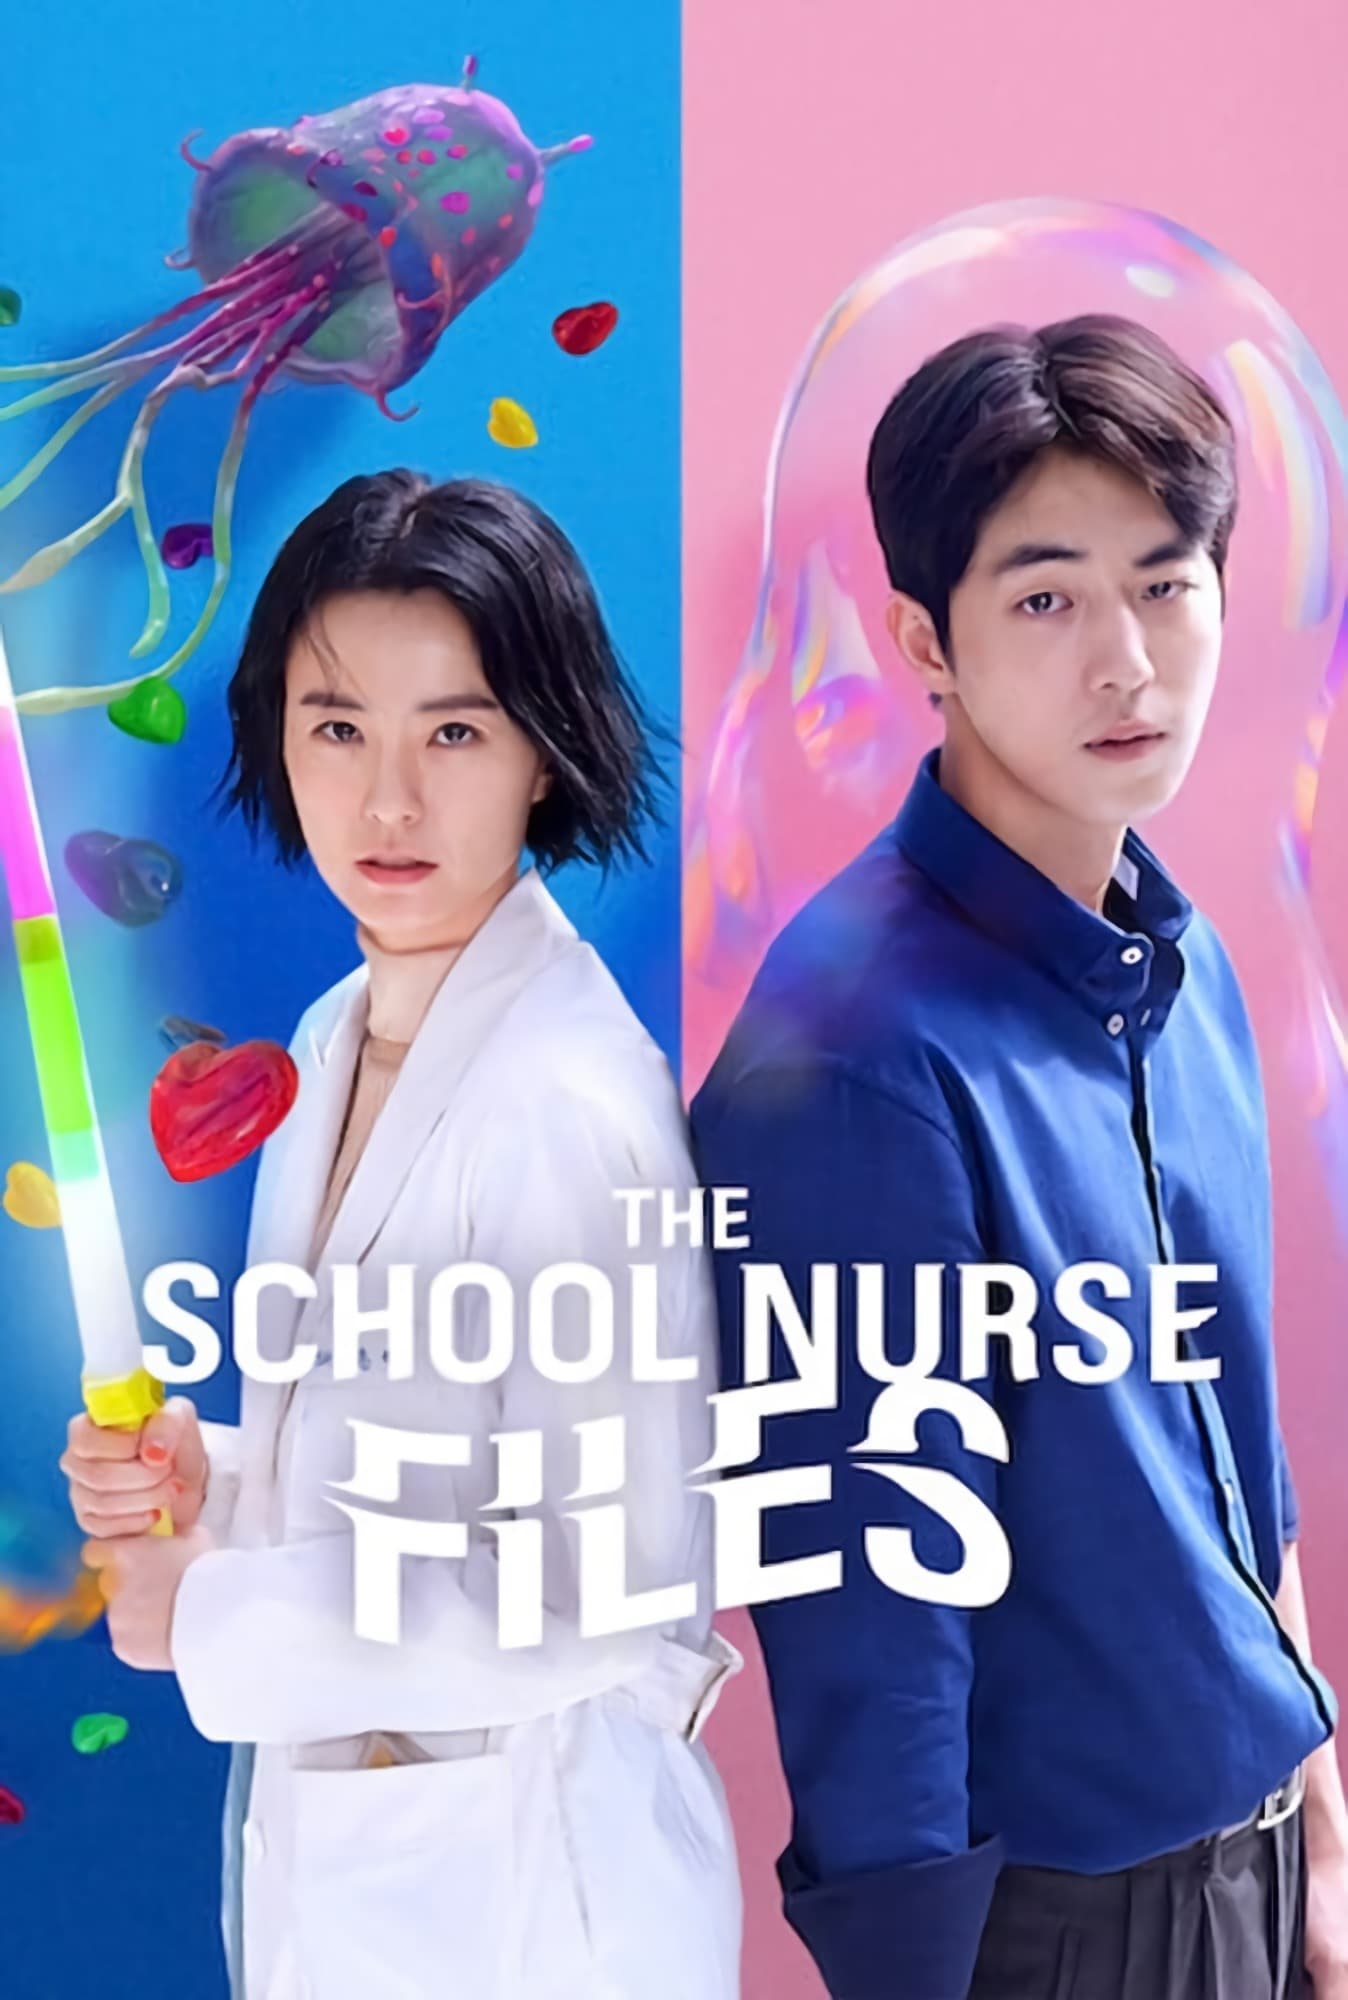 The School Nurse Files (2020)